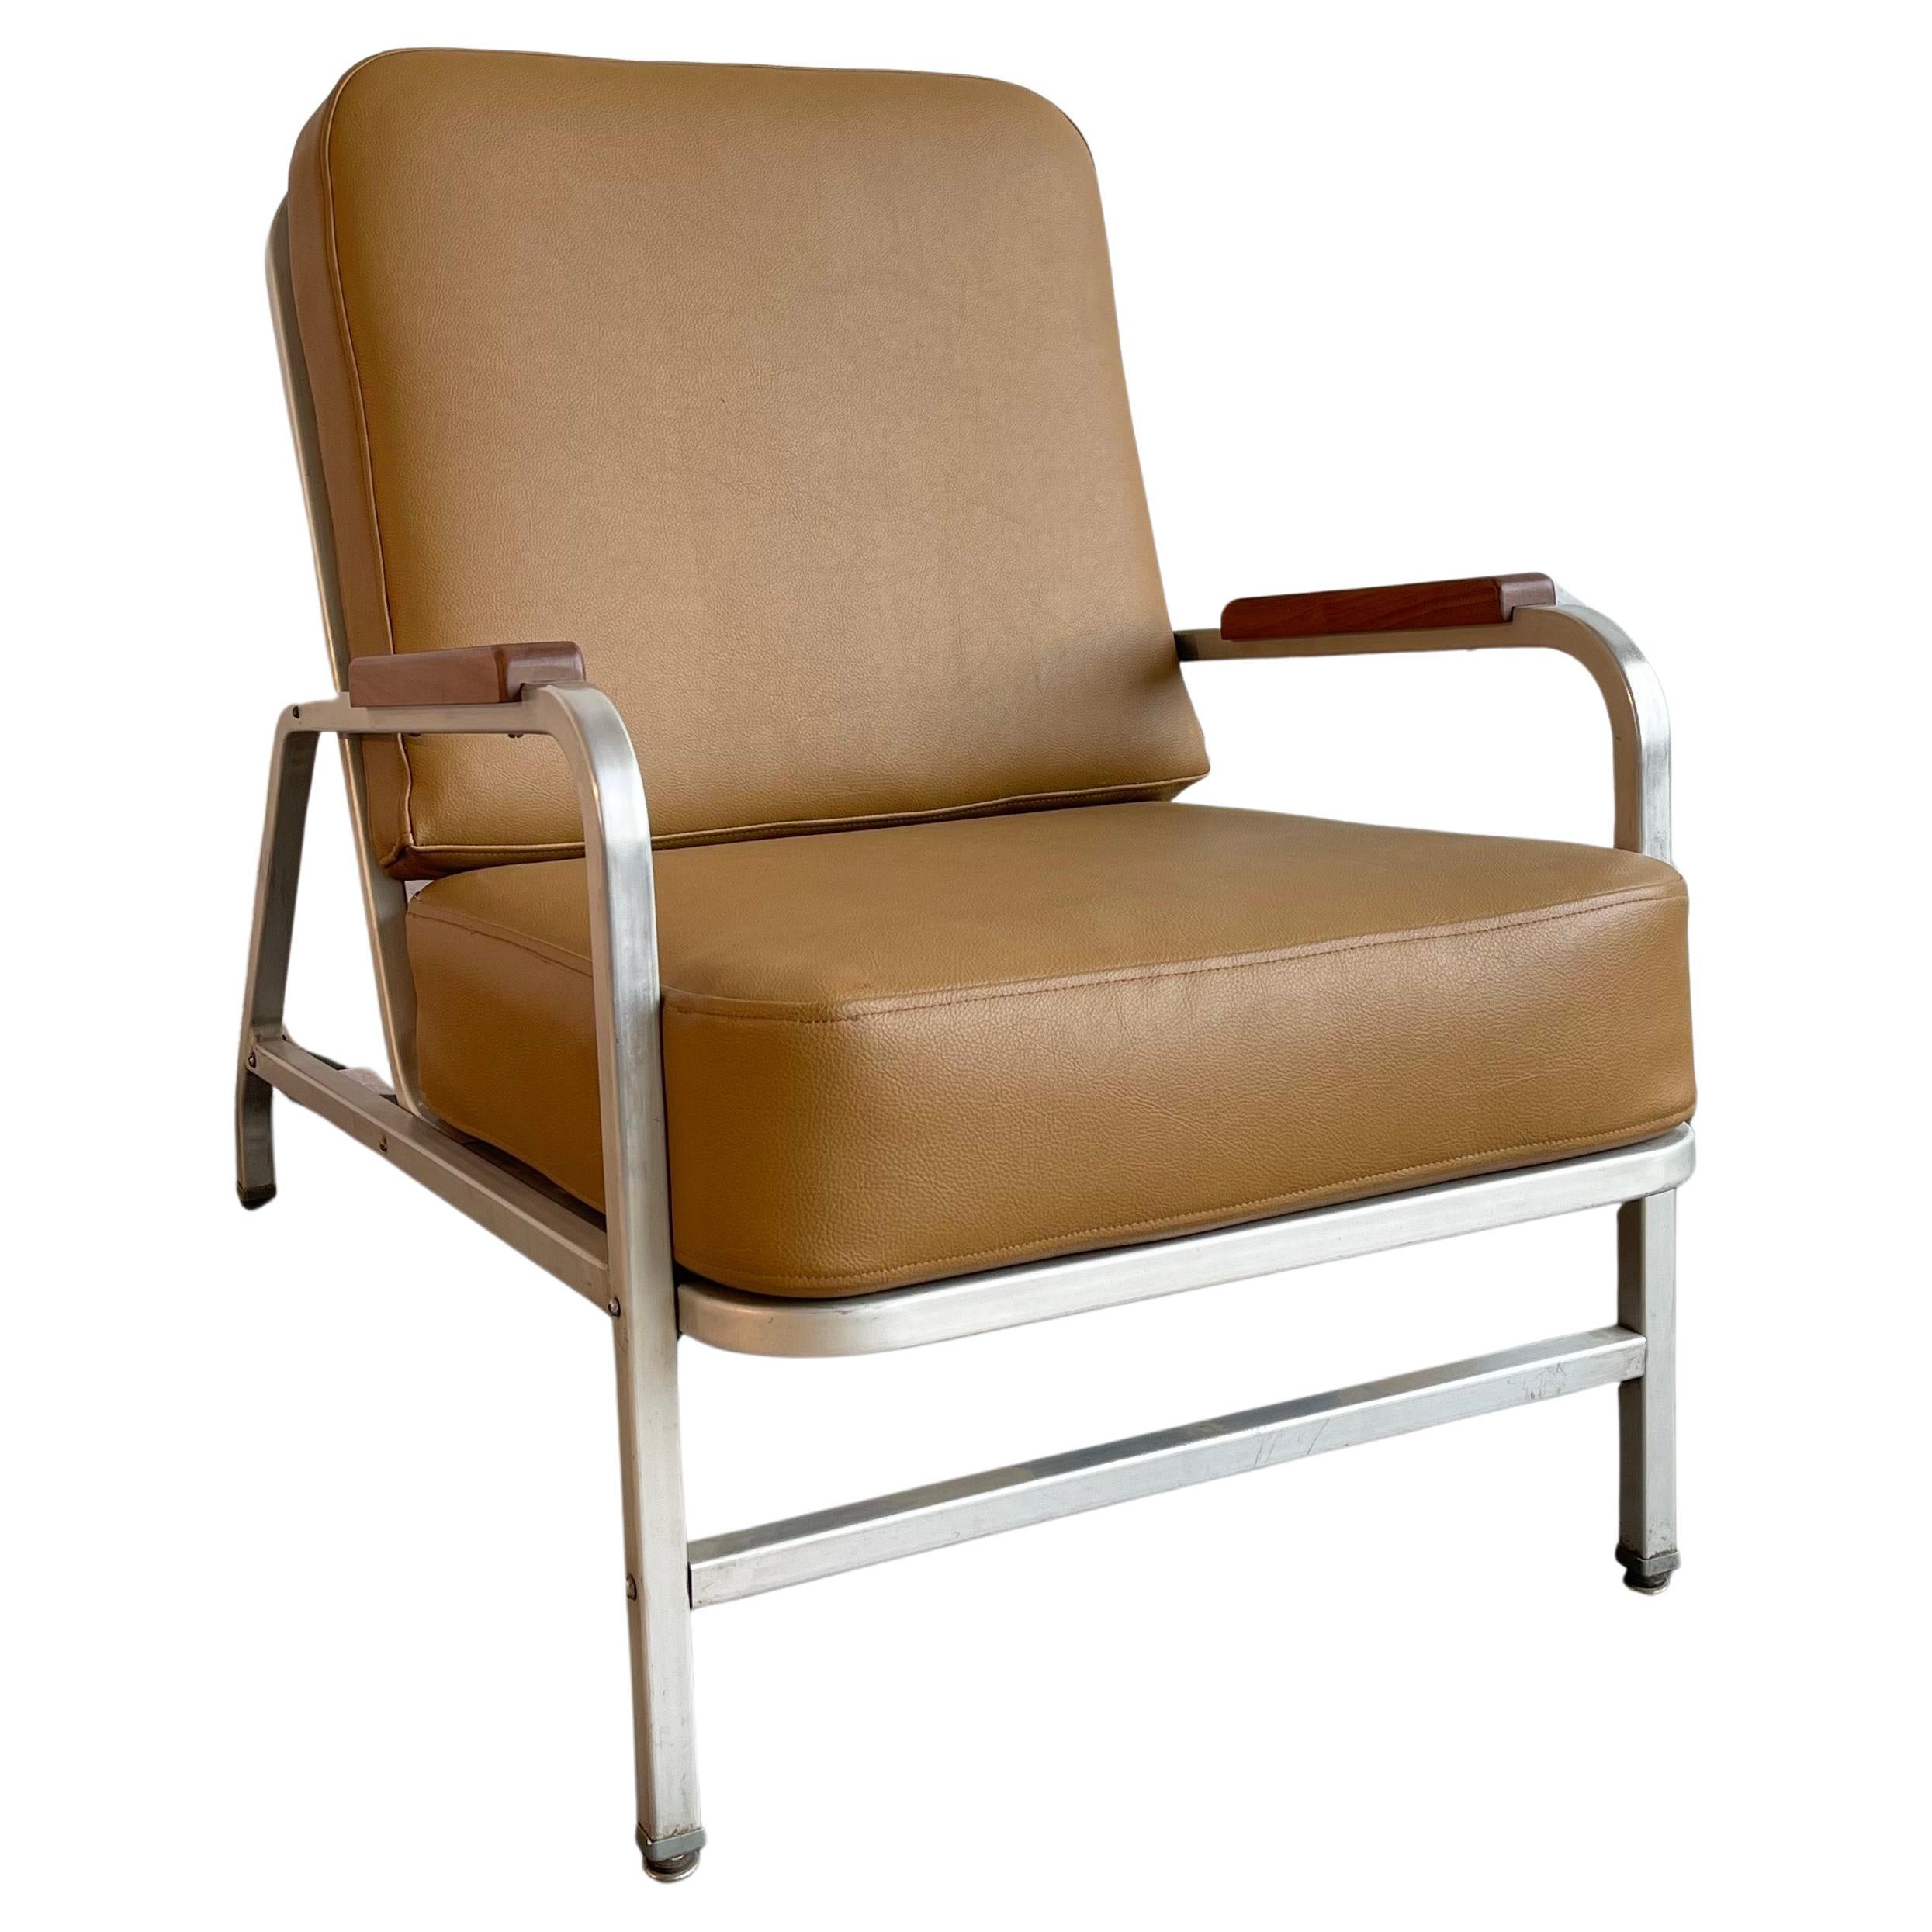 Machine Age Lounge Chairs